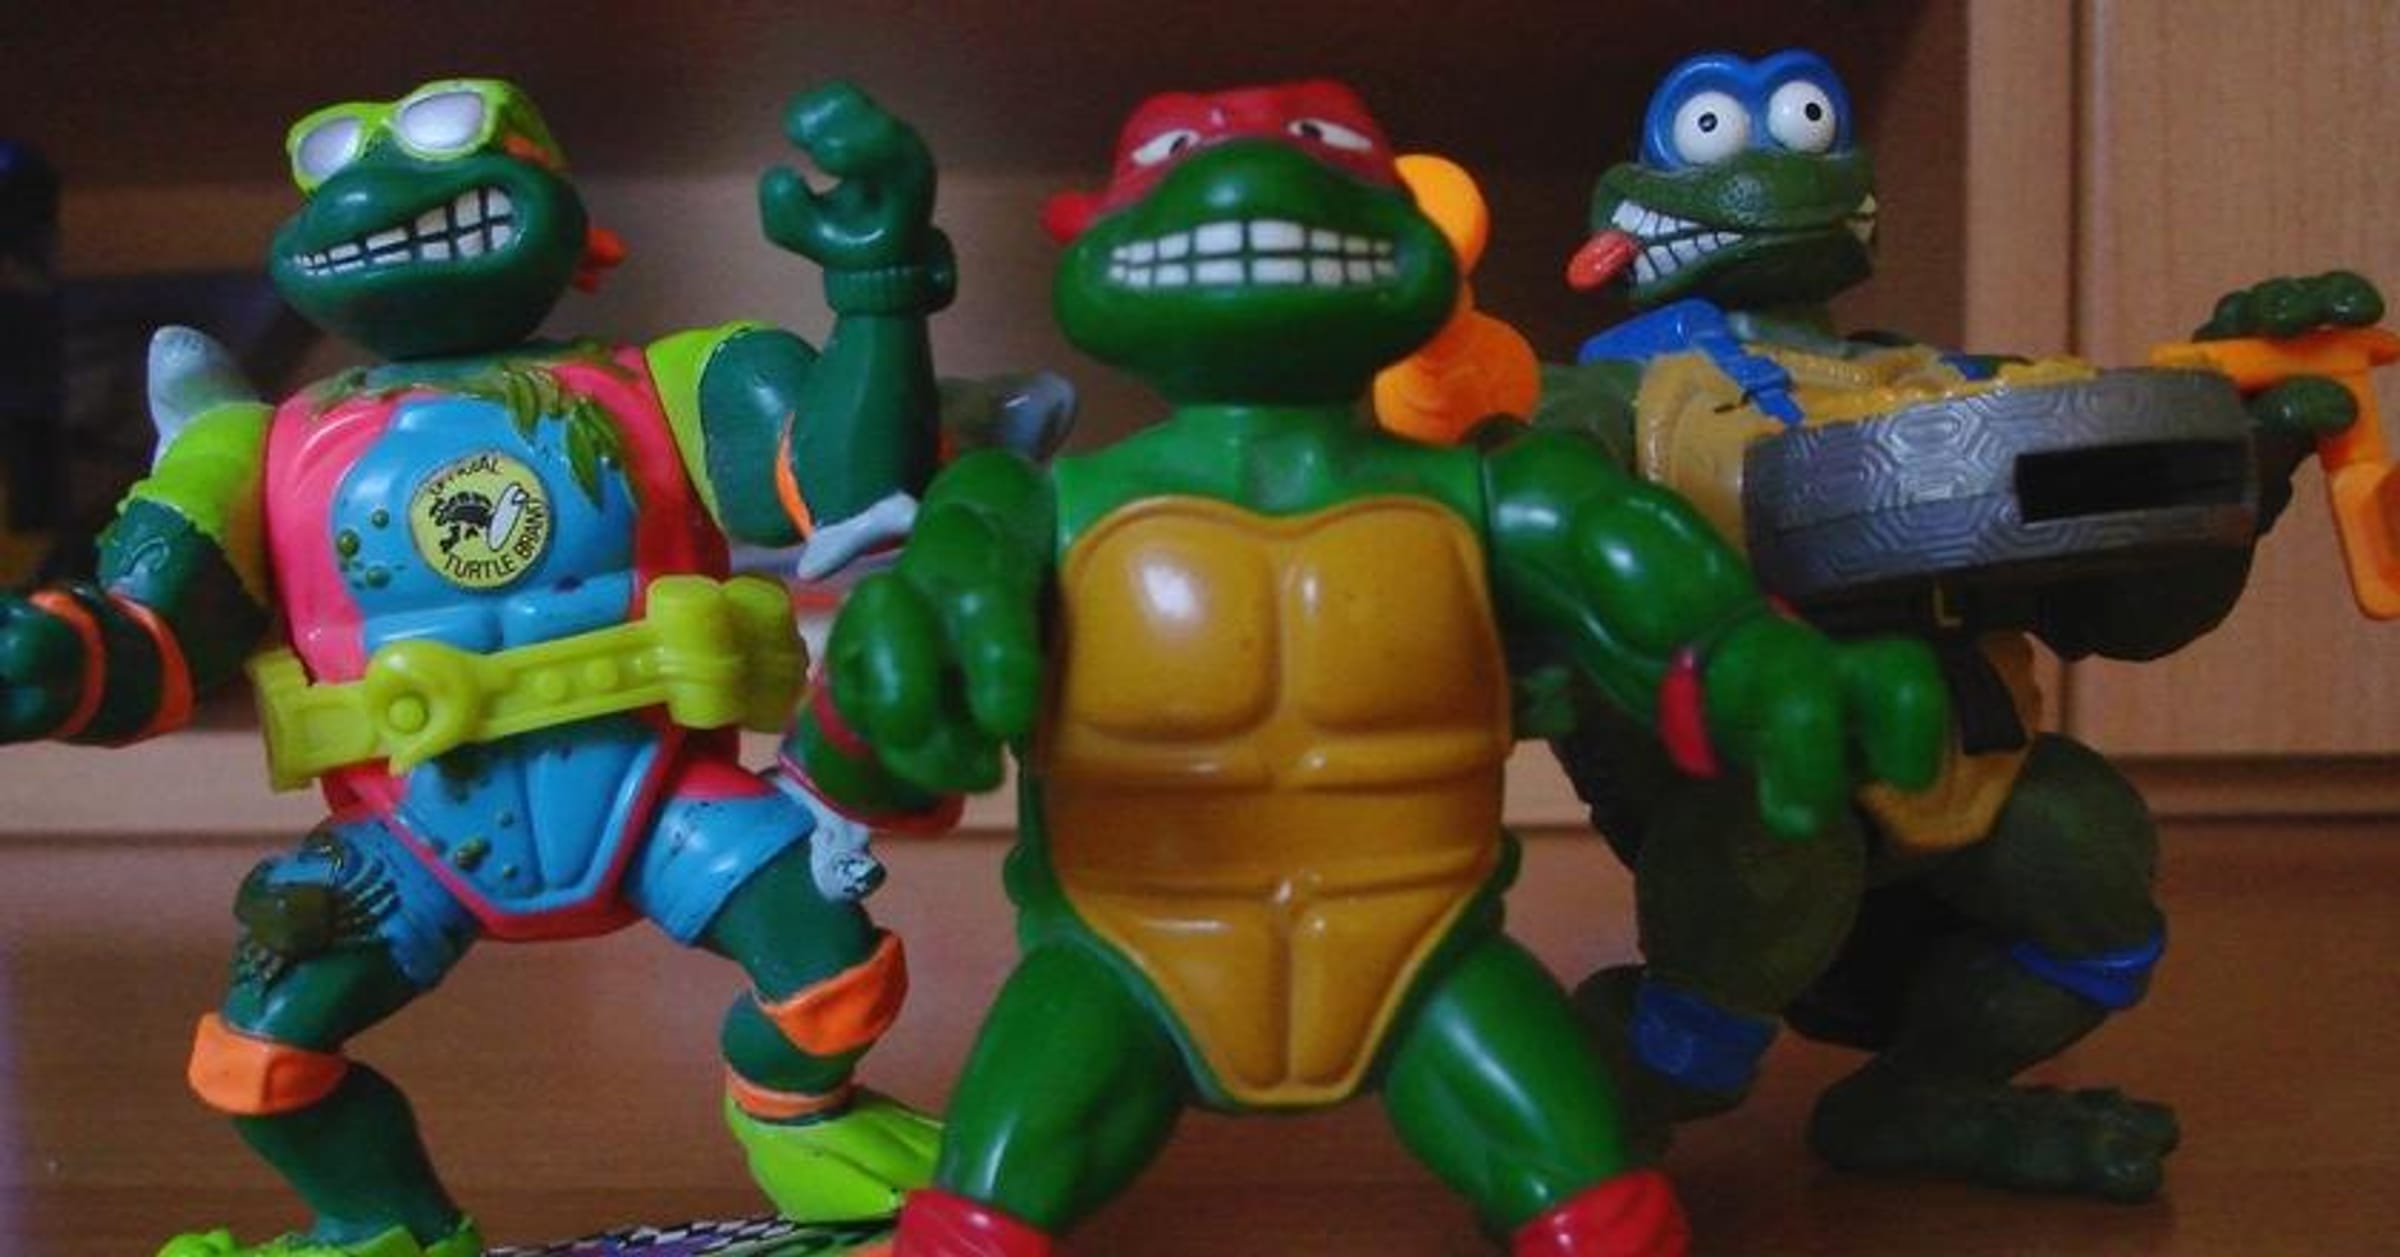 https://imgix.ranker.com/list_img_v2/10500/2390500/original/dumb-teenage-mutant-ninja-turtle-toys?fit=crop&fm=pjpg&q=80&dpr=2&w=1200&h=720